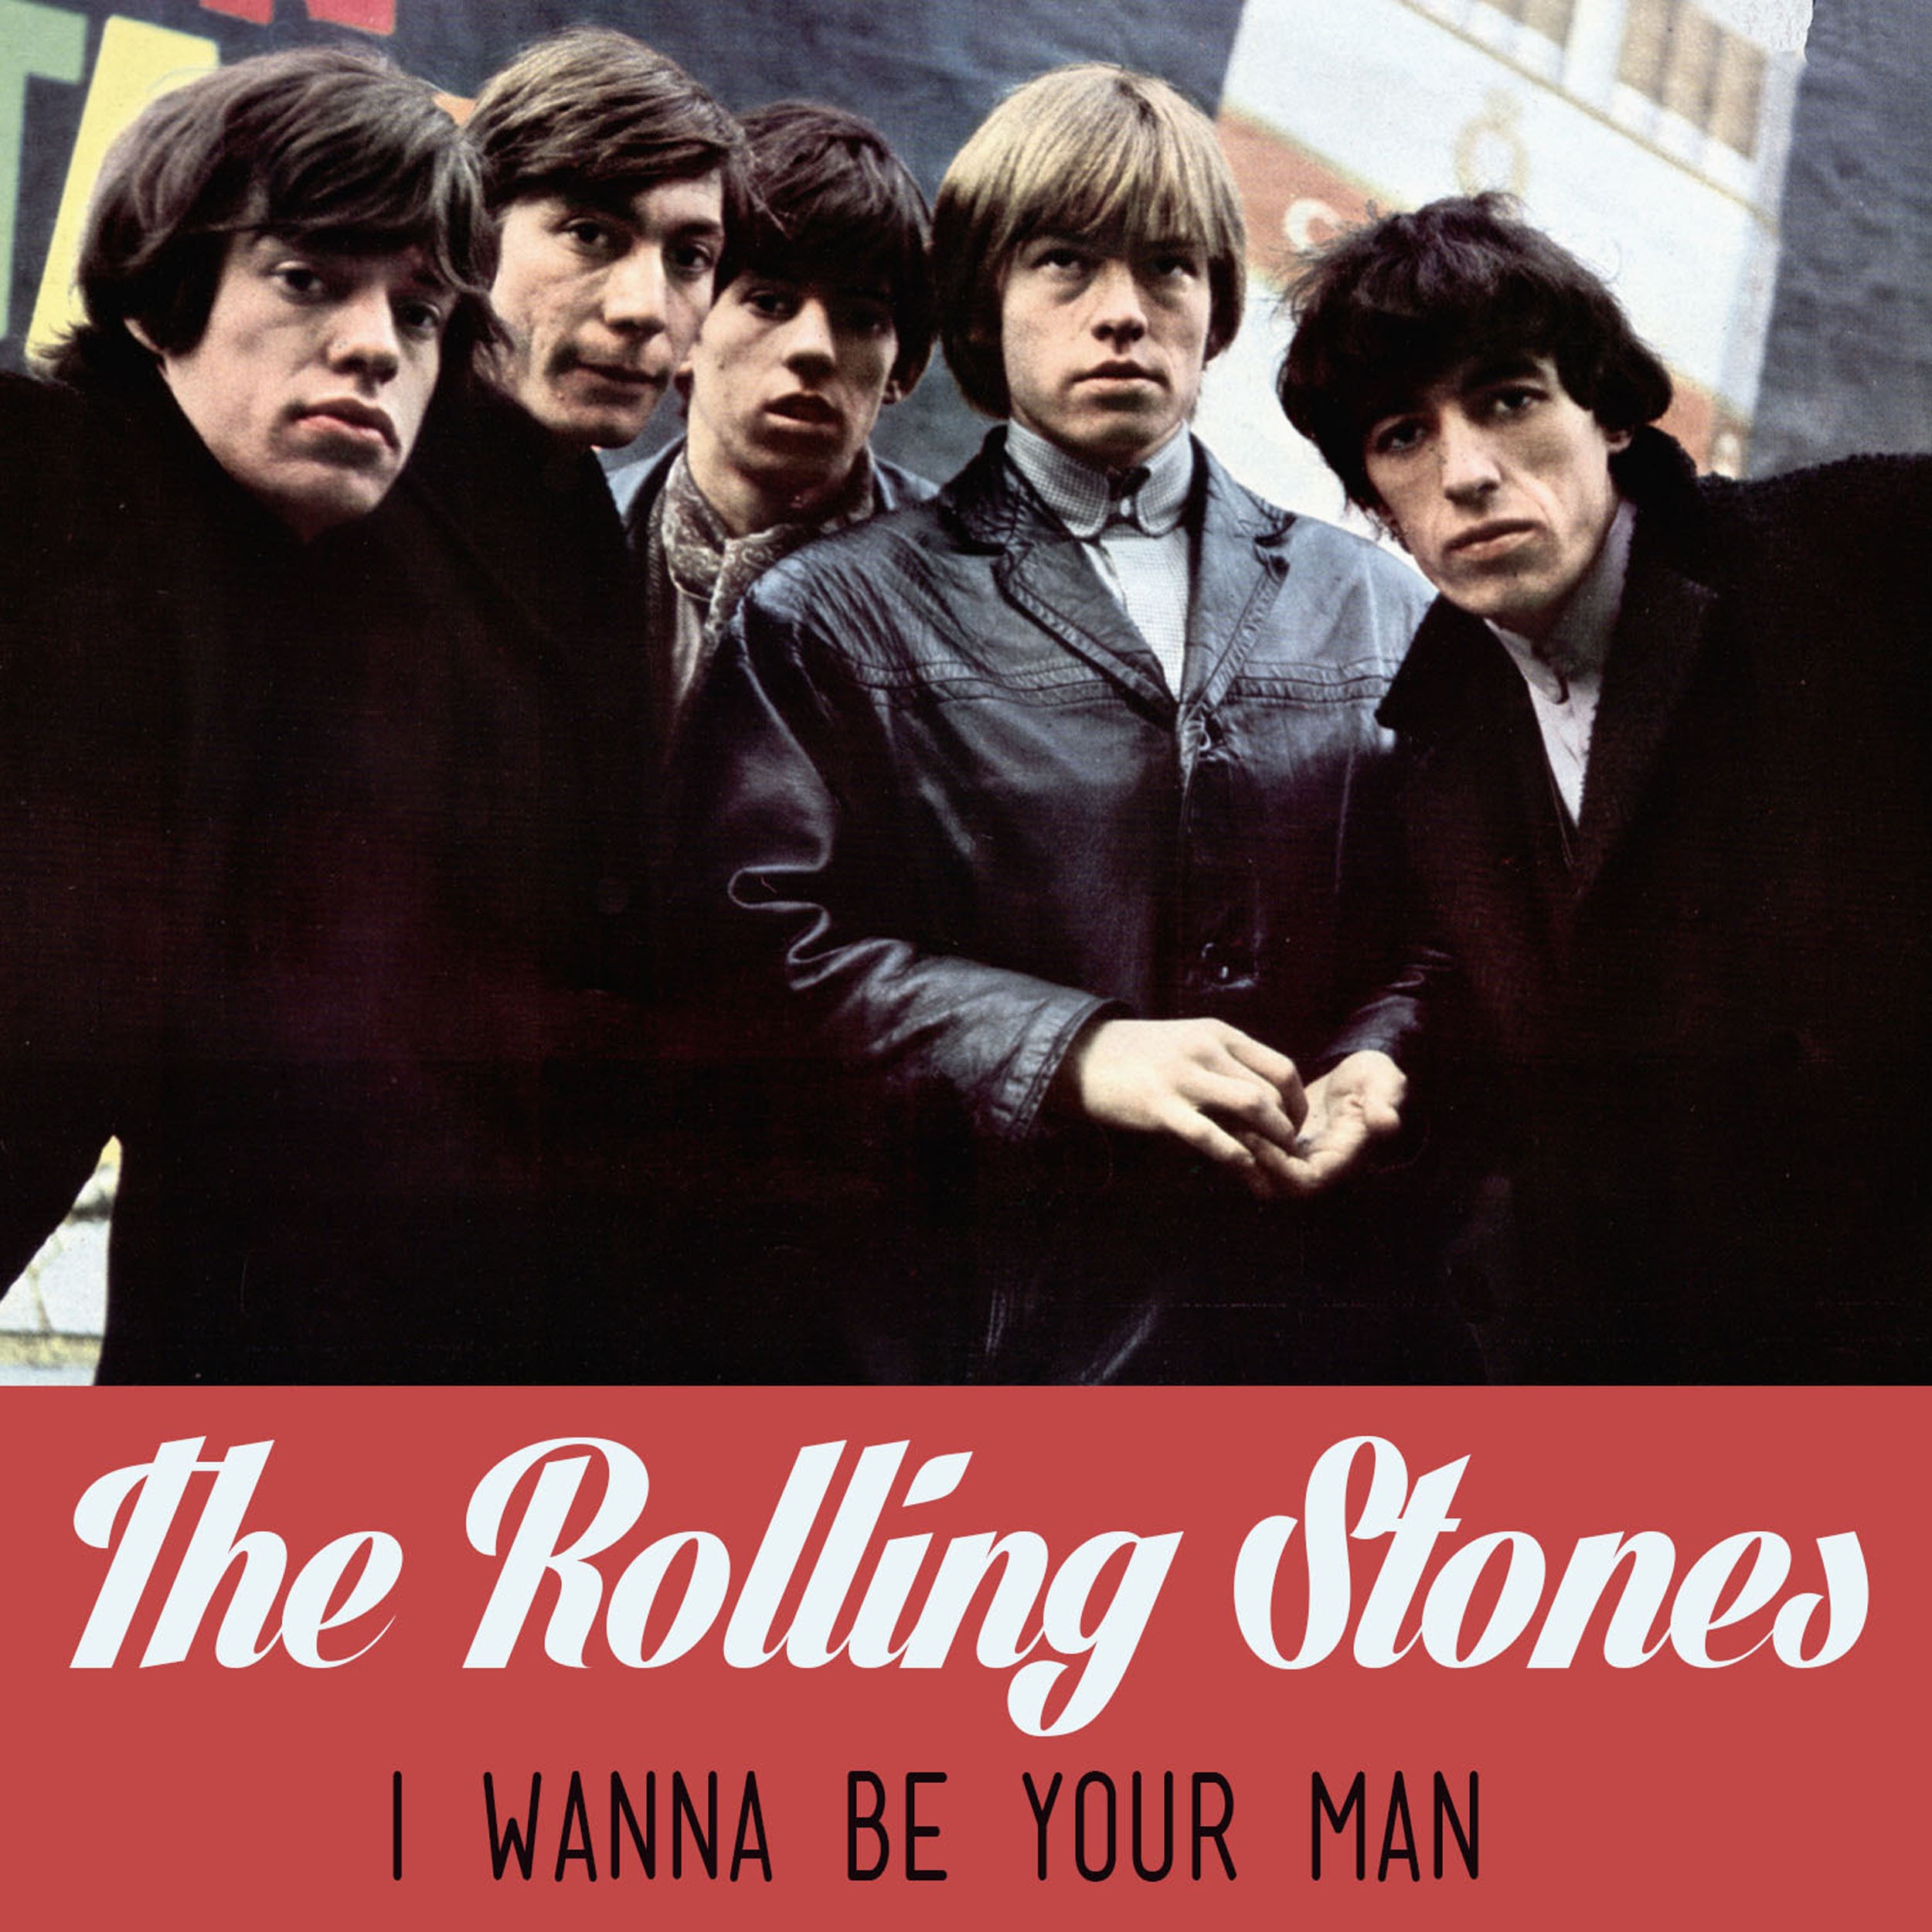 Rolling stones song stoned. The Rolling Stones. Роллинги 1965. Rolling Stones сейчас. Rolling Stones обложки альбомов.